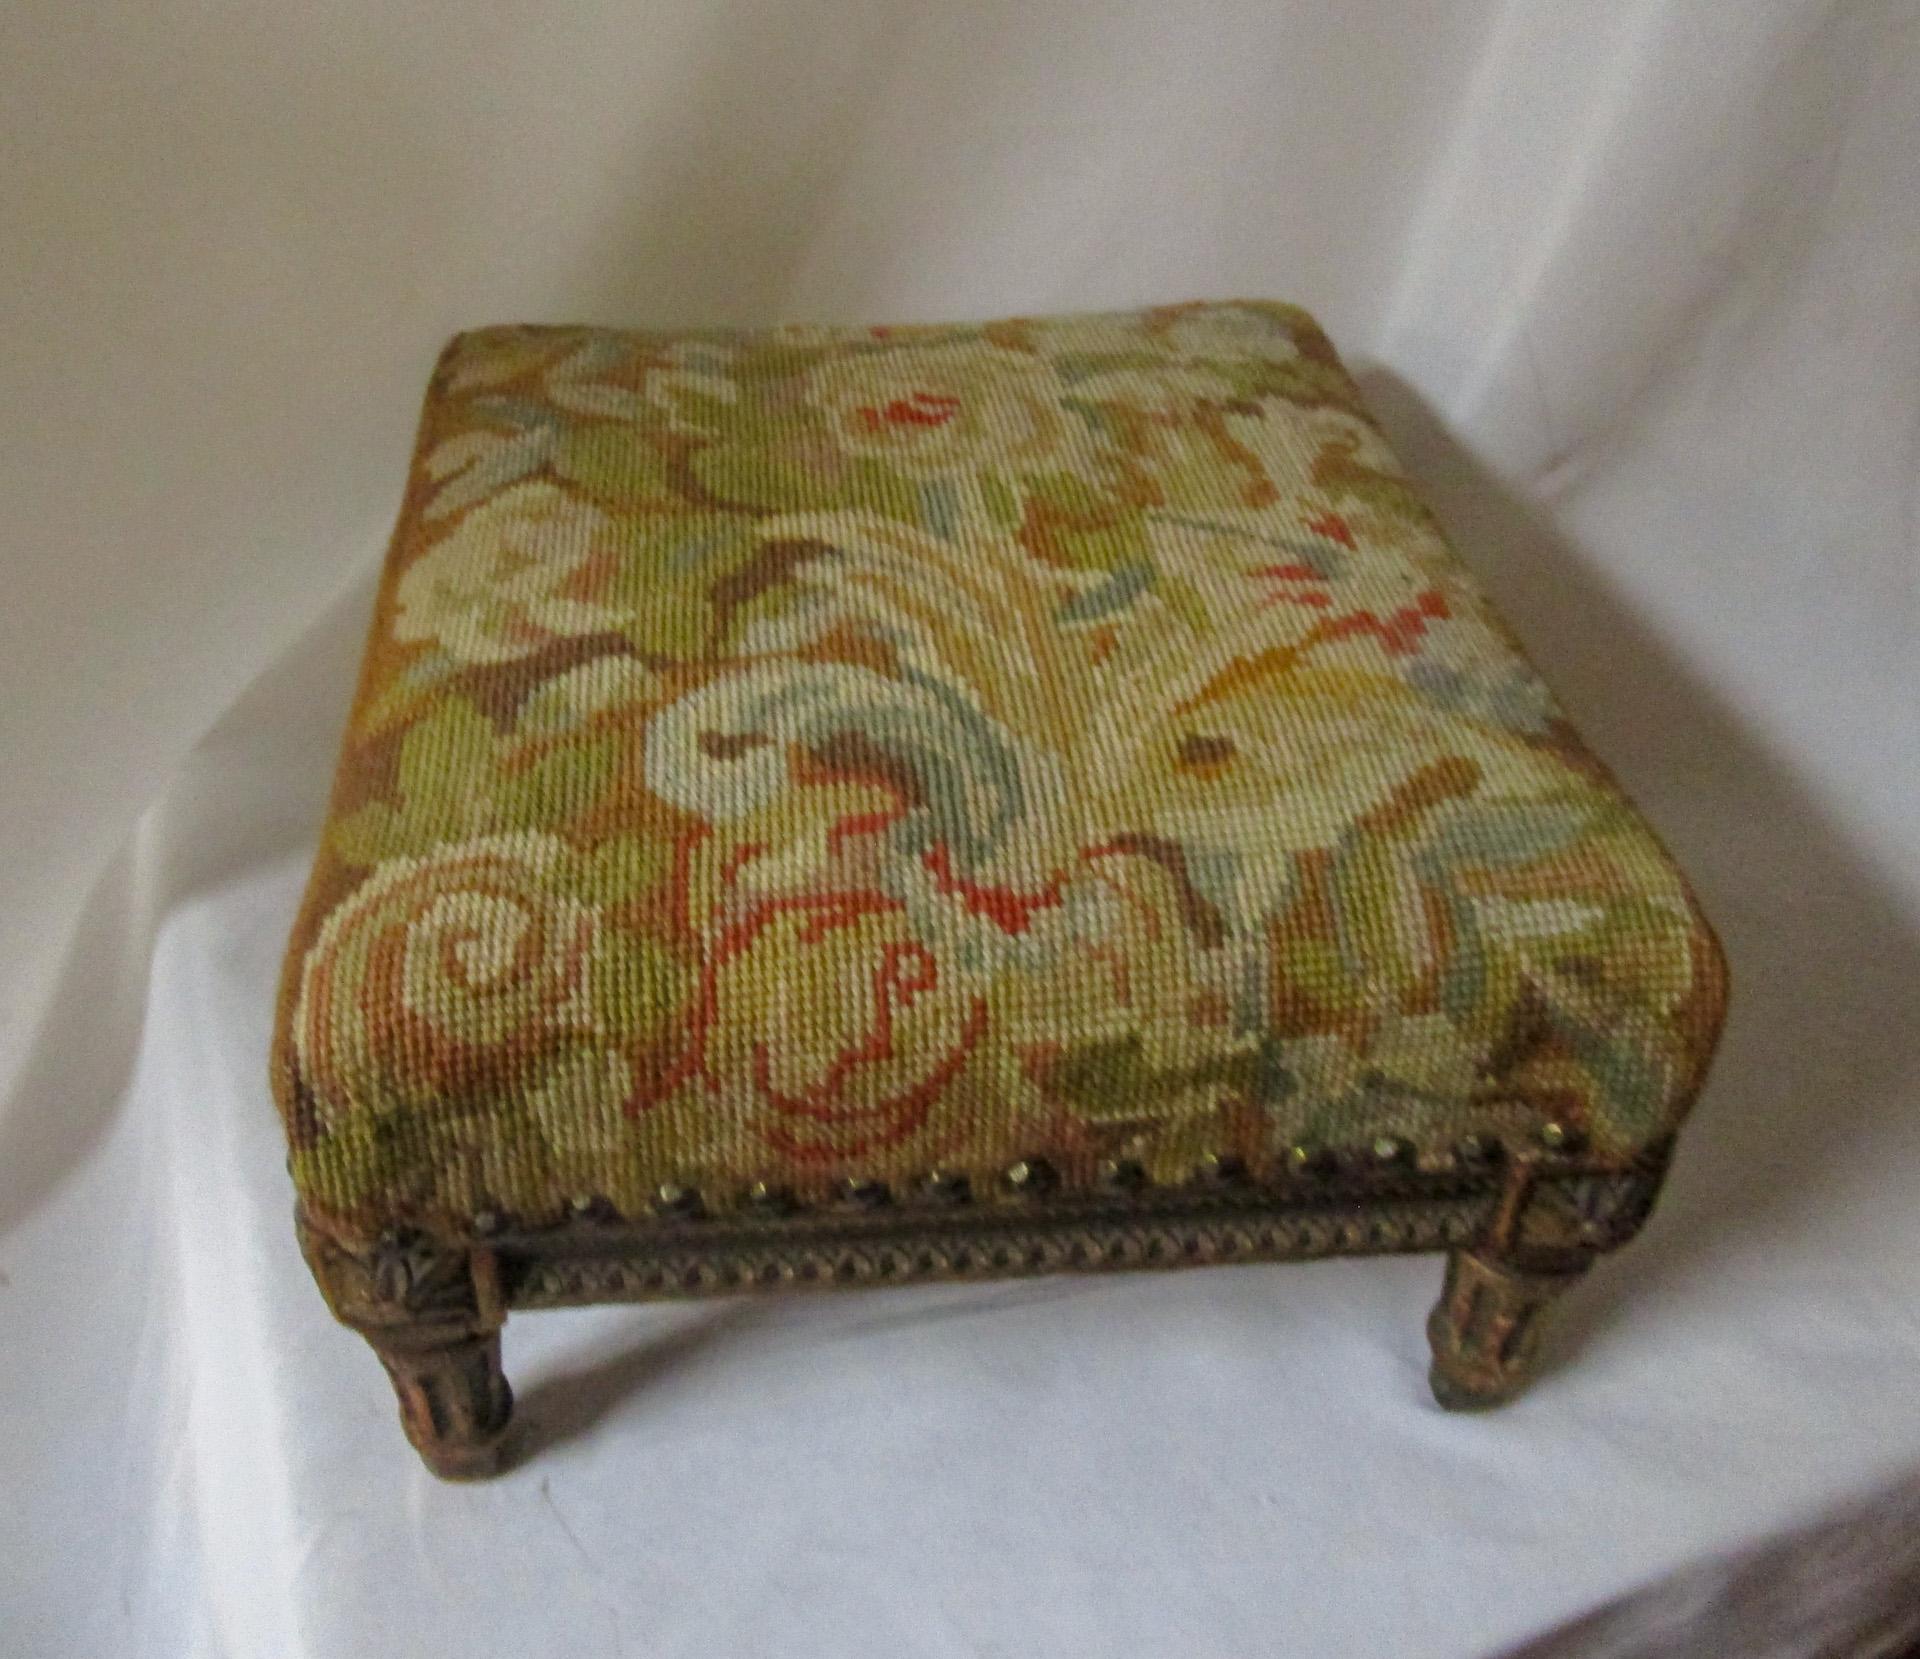 Fabric French Napoleon III Giltwood 19th Century Footstool with Needlepoint Upholstery